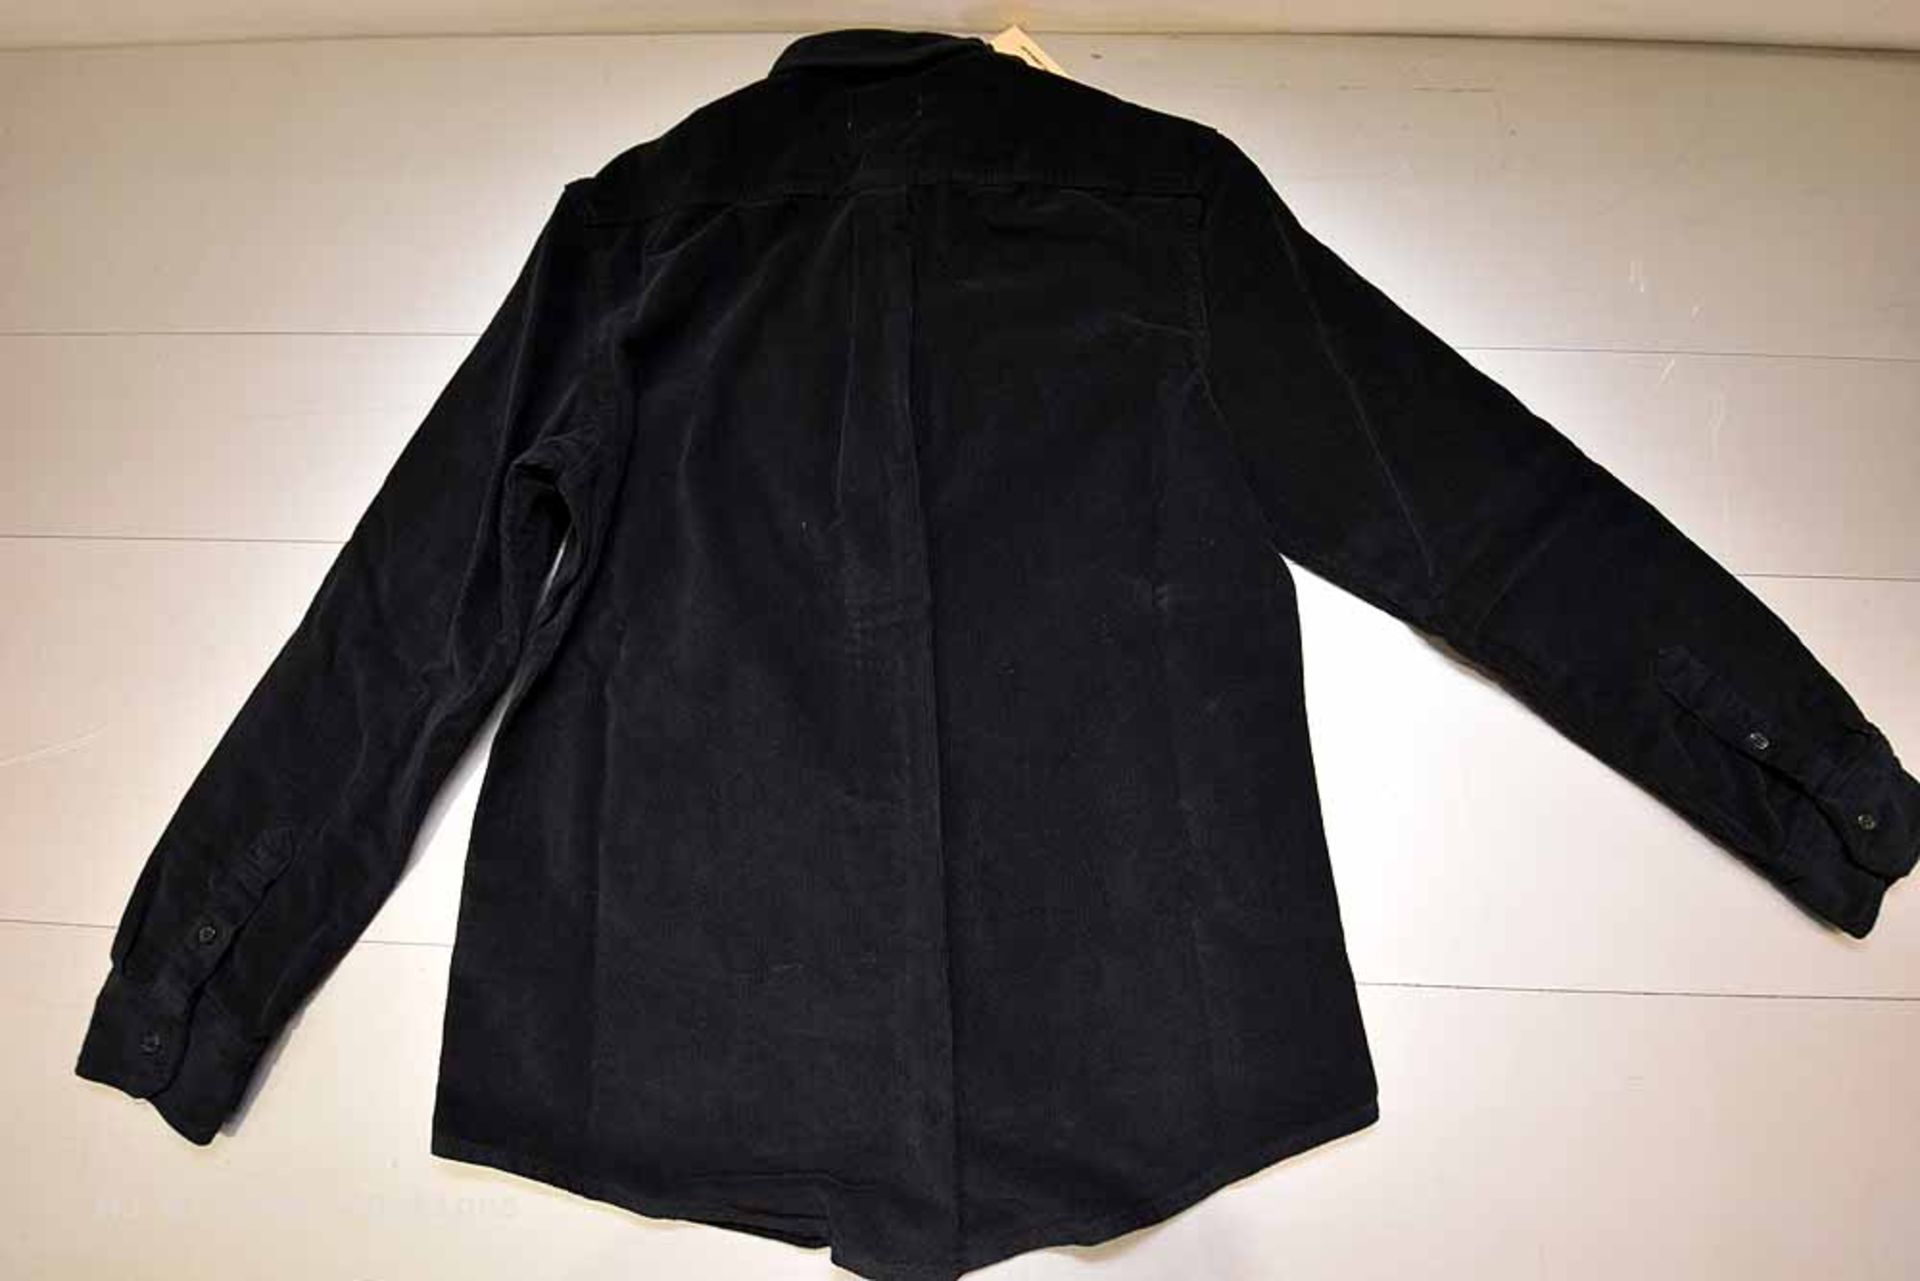 The Cords & Co. "Odd" Style, Uni-Sex Collard Long Sleeve Shirt(Black) Small, Medium, Large, X-Large - Image 4 of 6